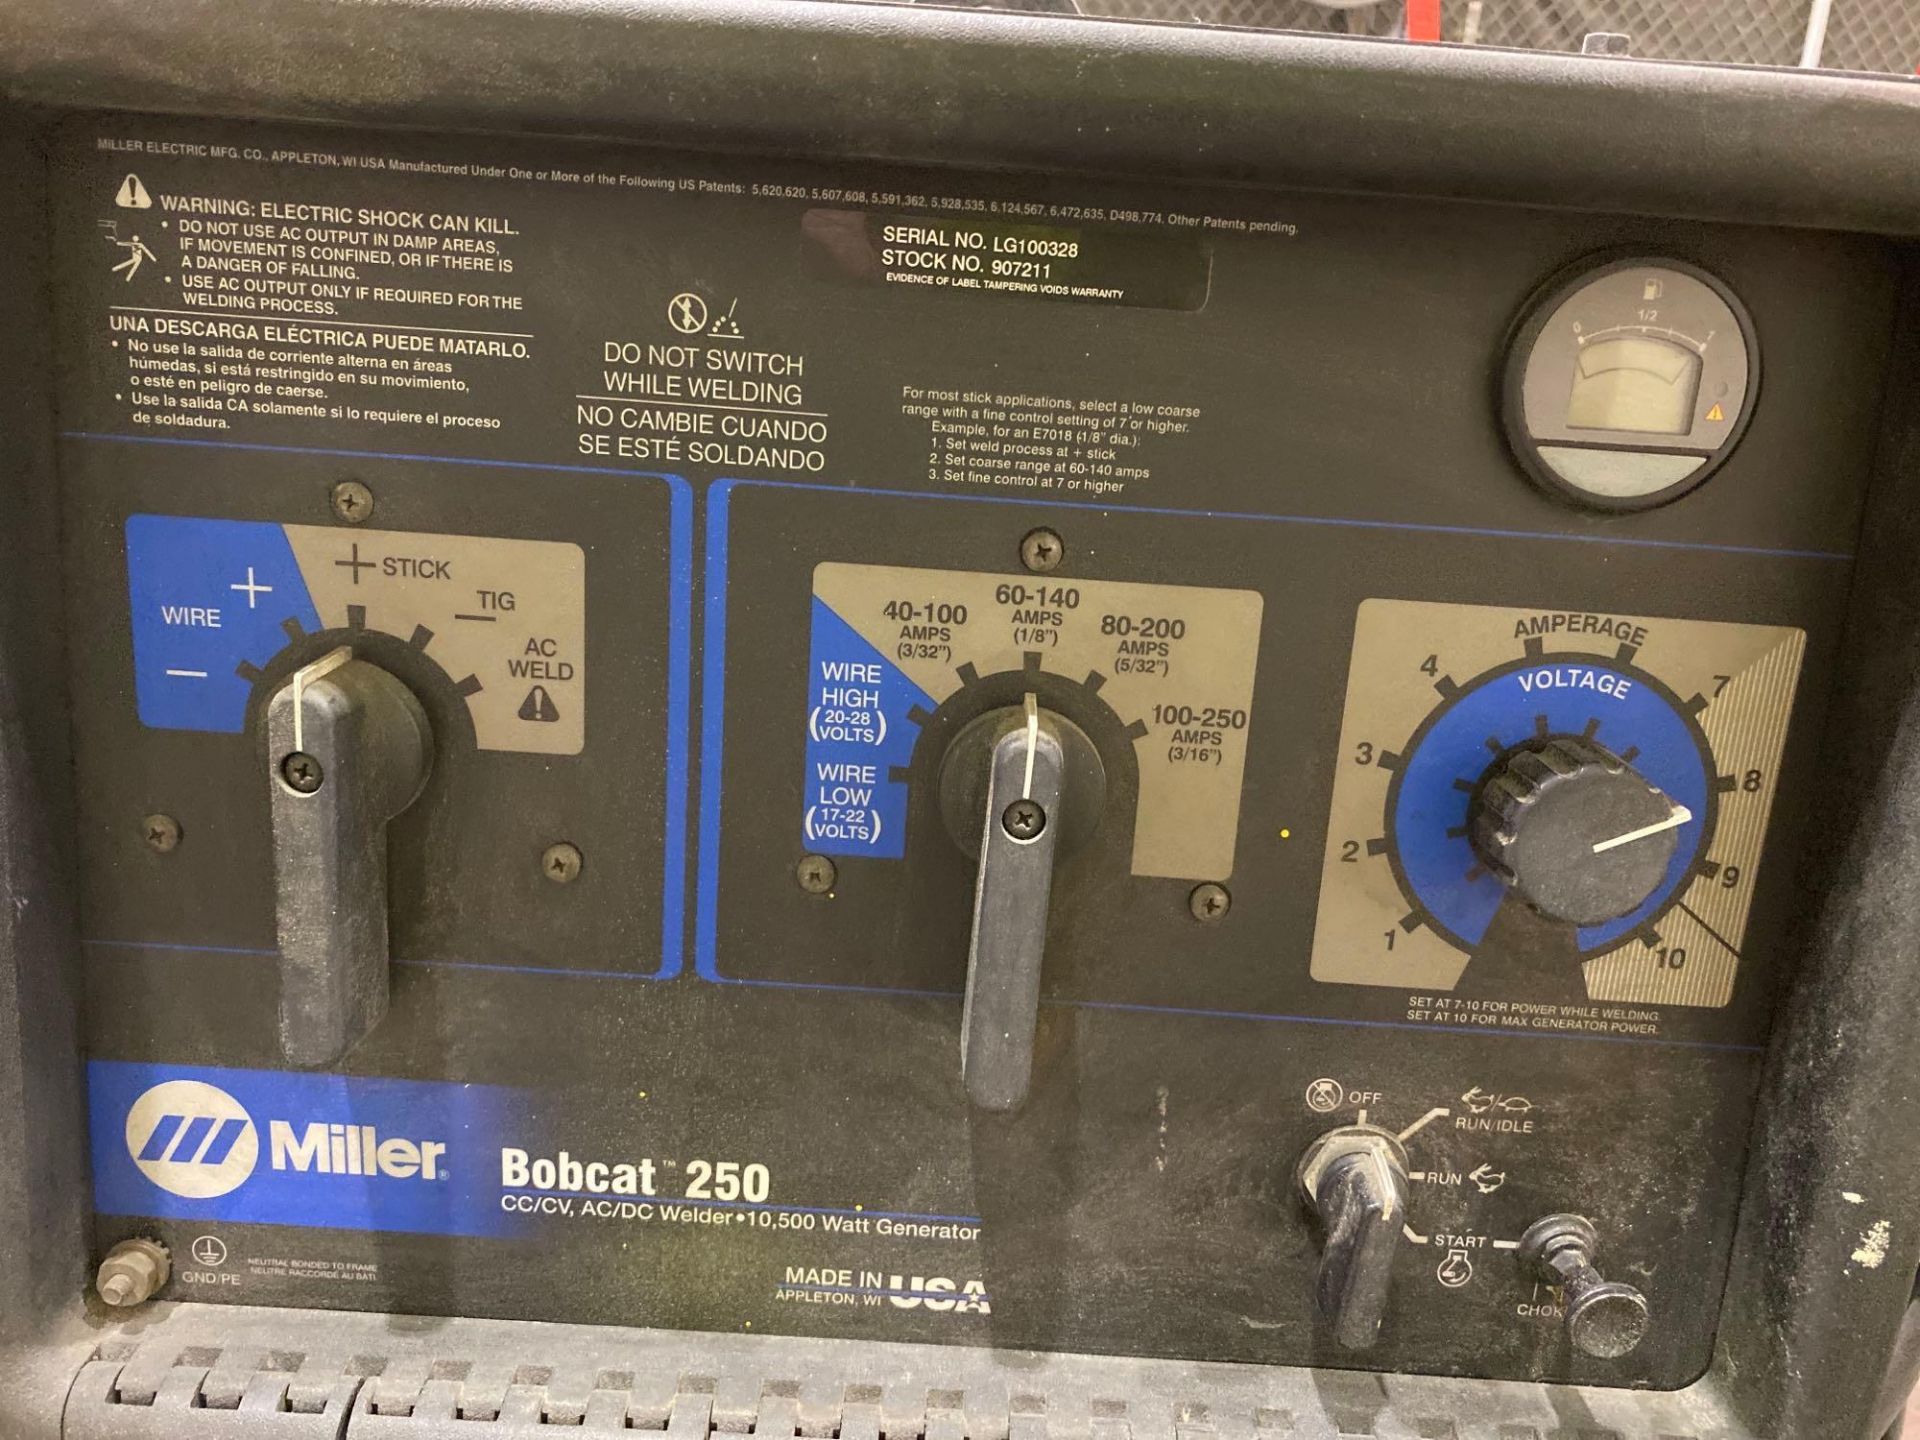 Miller Bobcat 250 Portable Gas Generator/Welder - Image 4 of 4